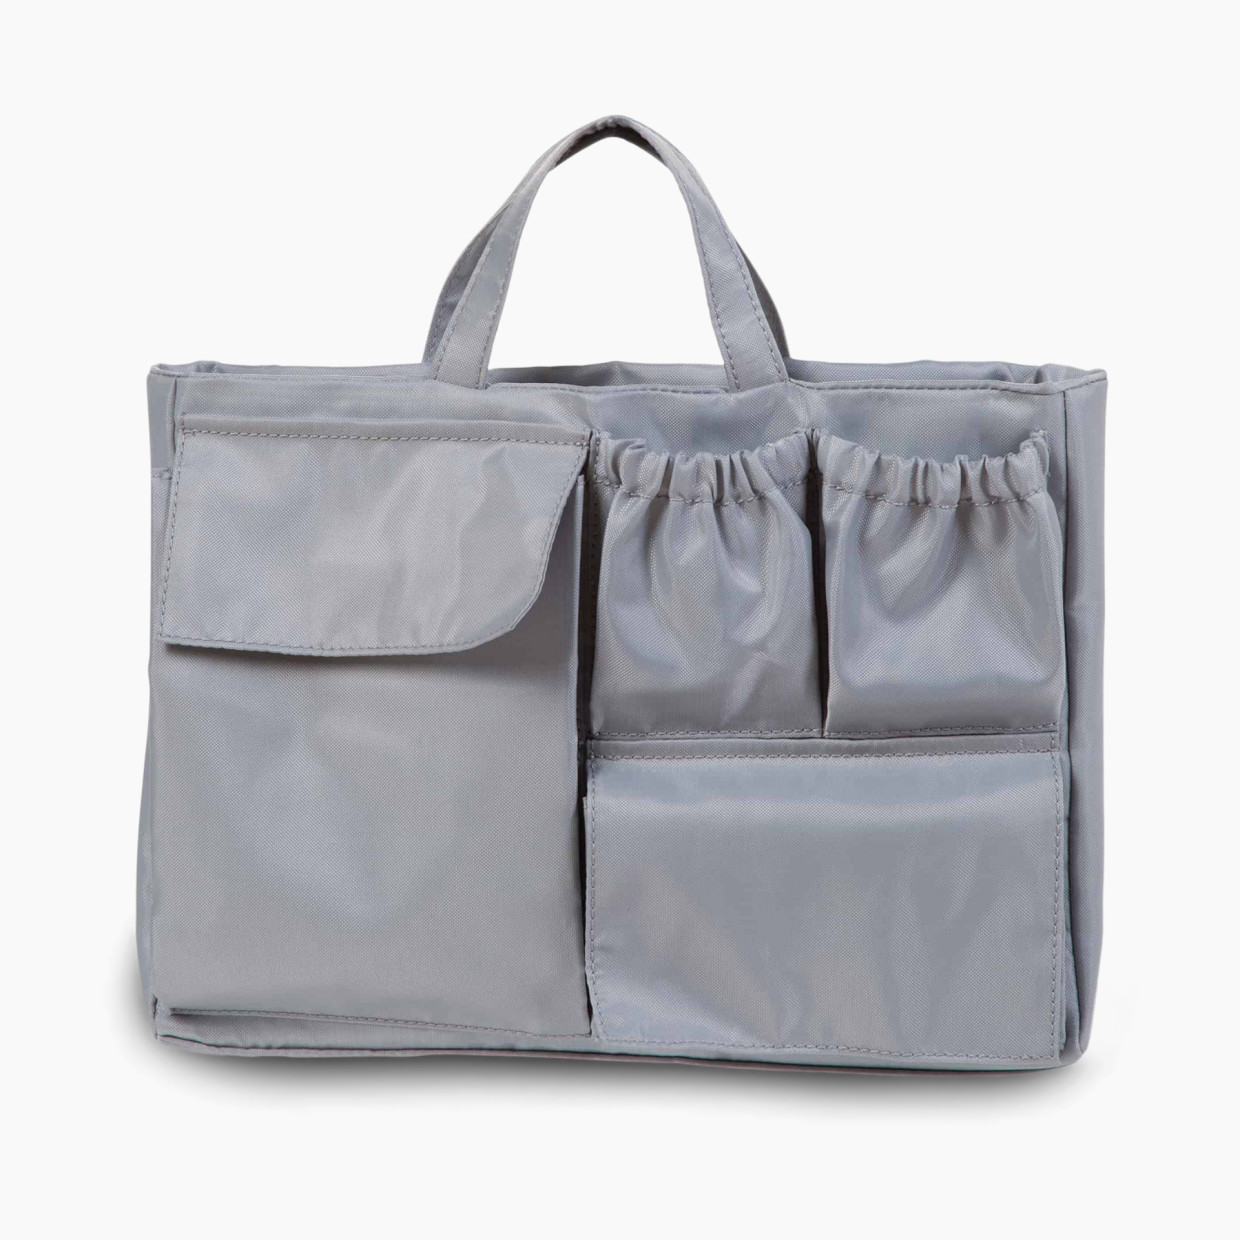 Childhome Bag Organizer - Grey.